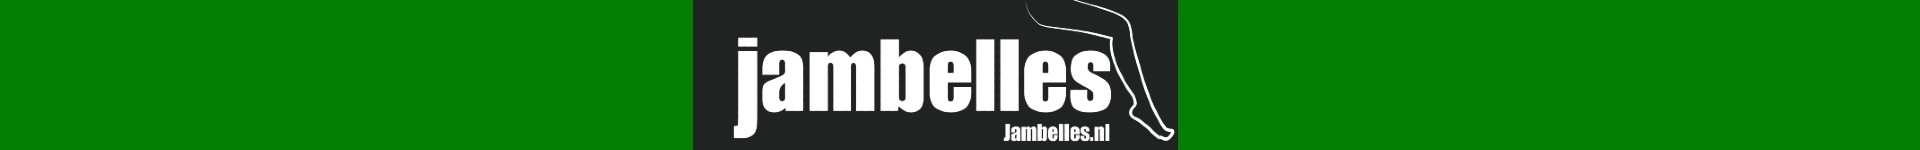 Jambelles.nls achtergrond